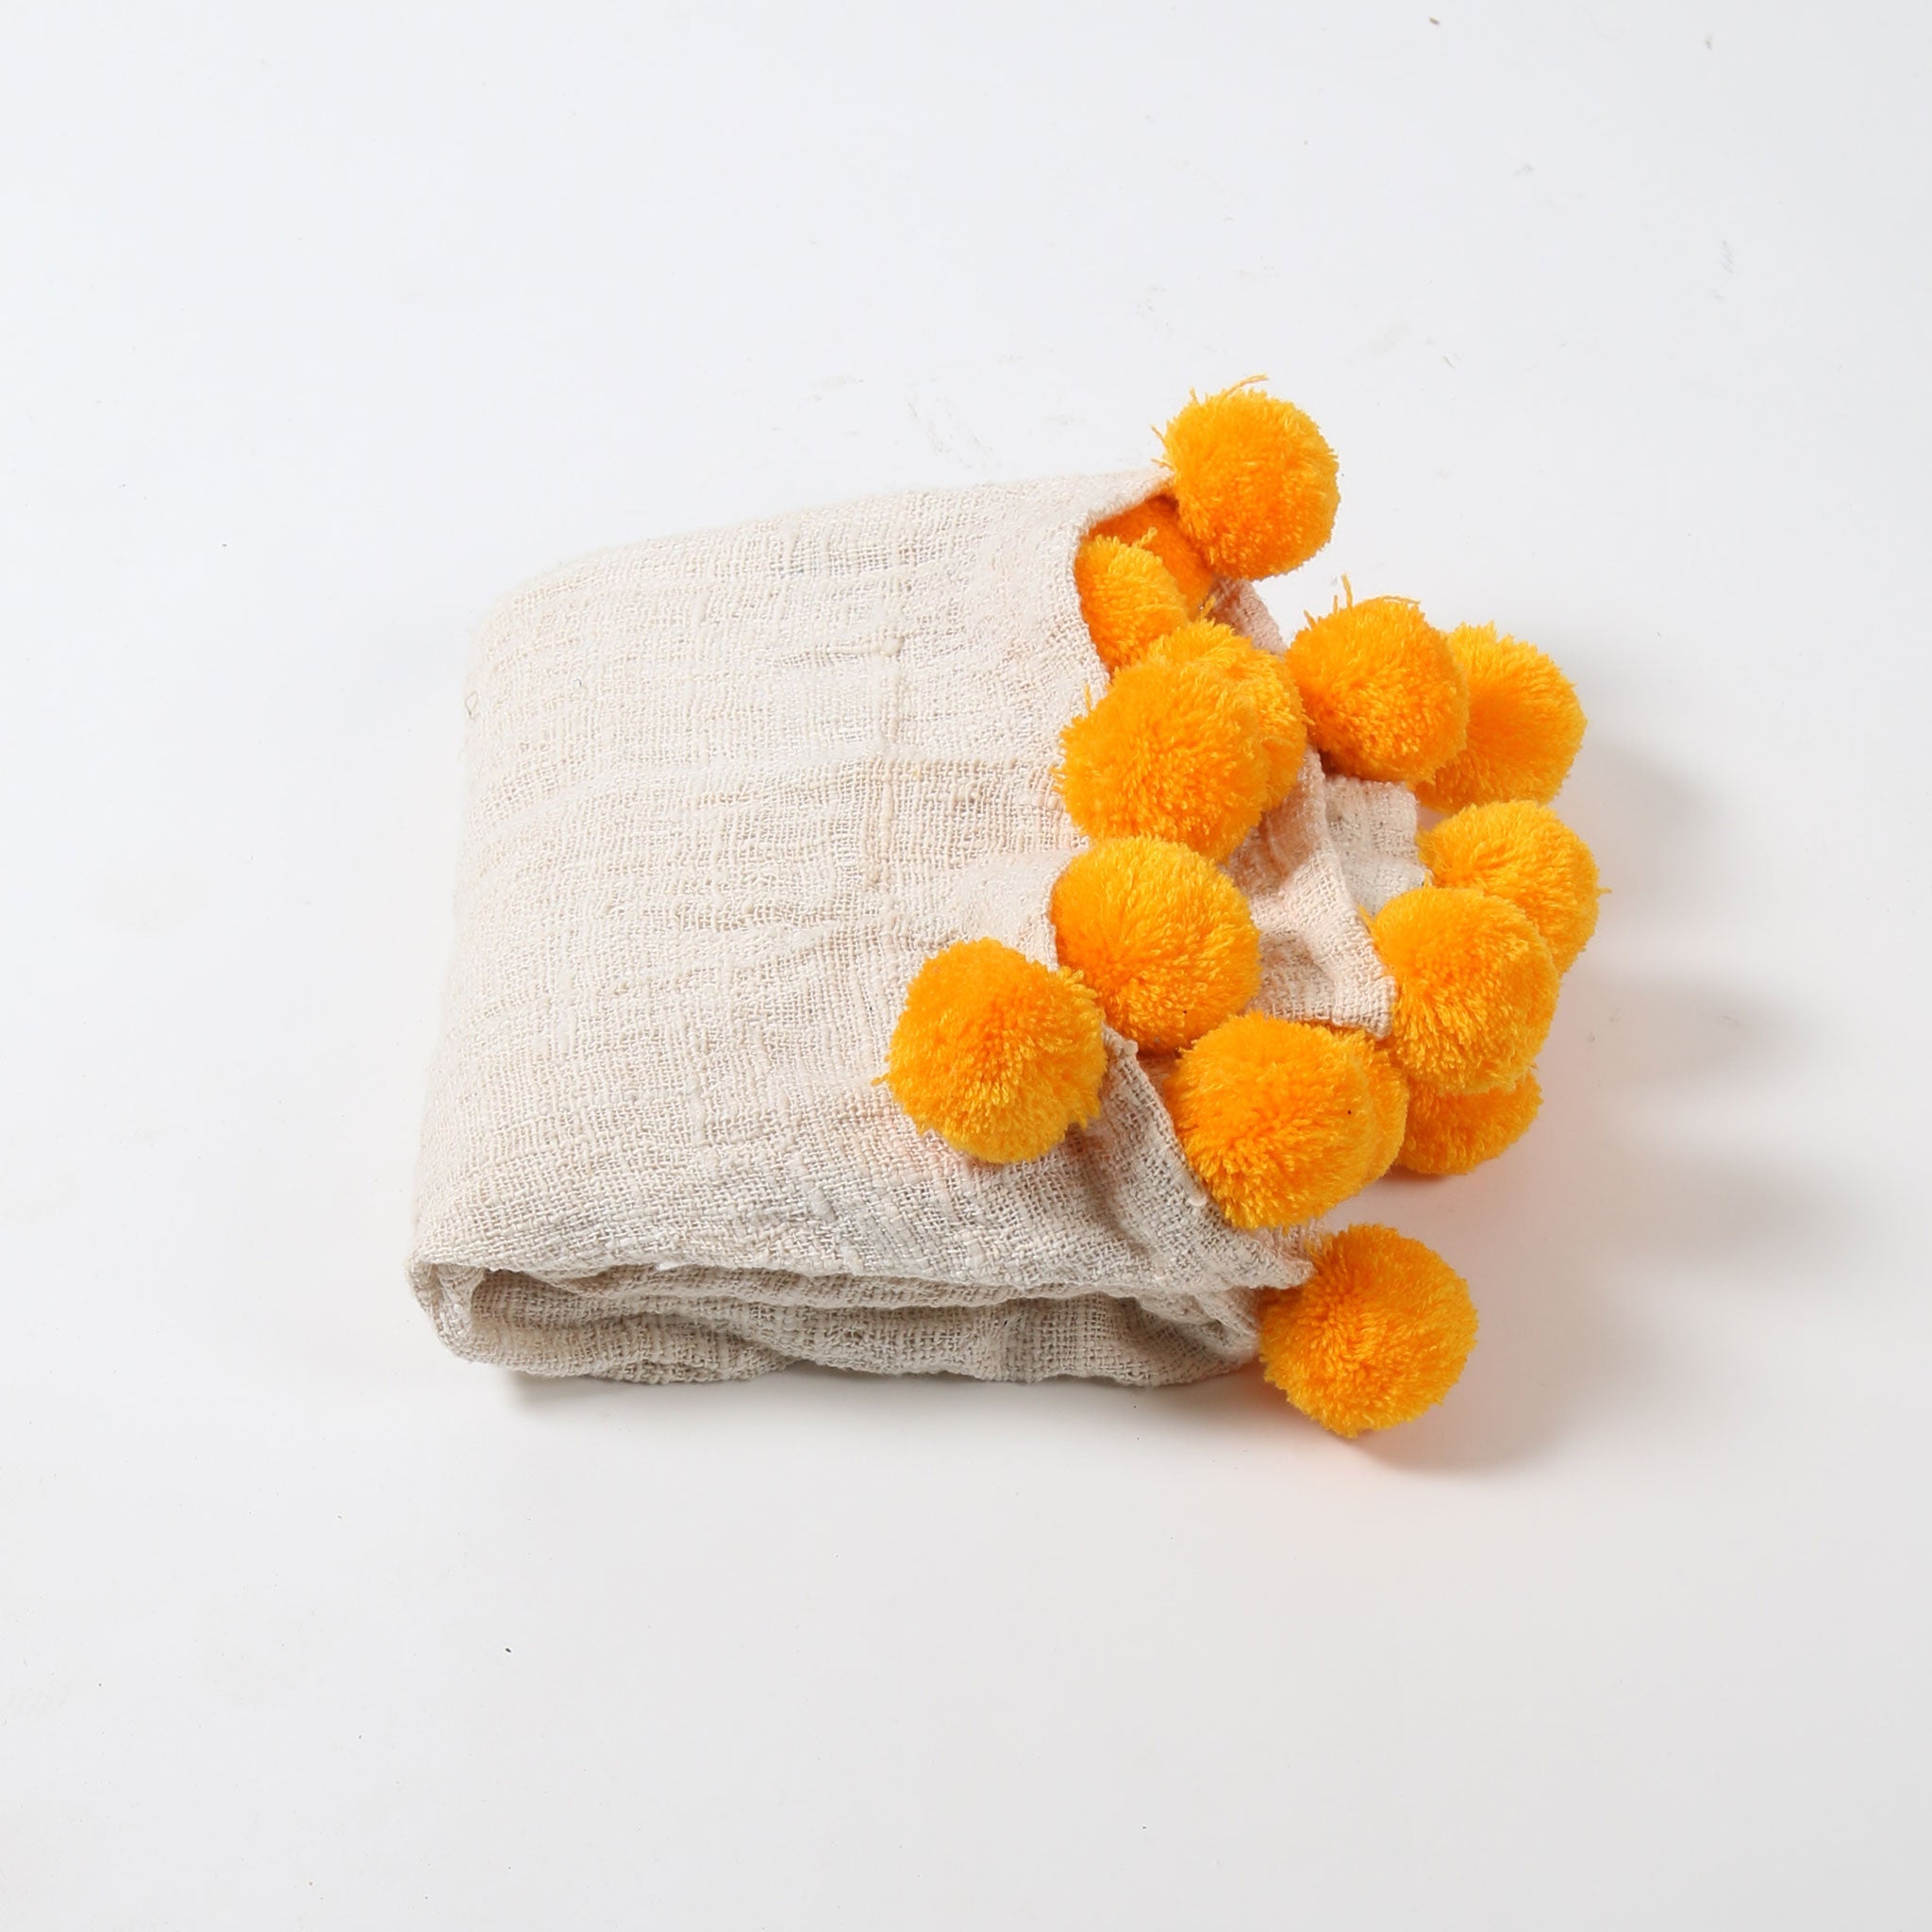 Cream Cotton Textured Throw with Orange Pom Poms